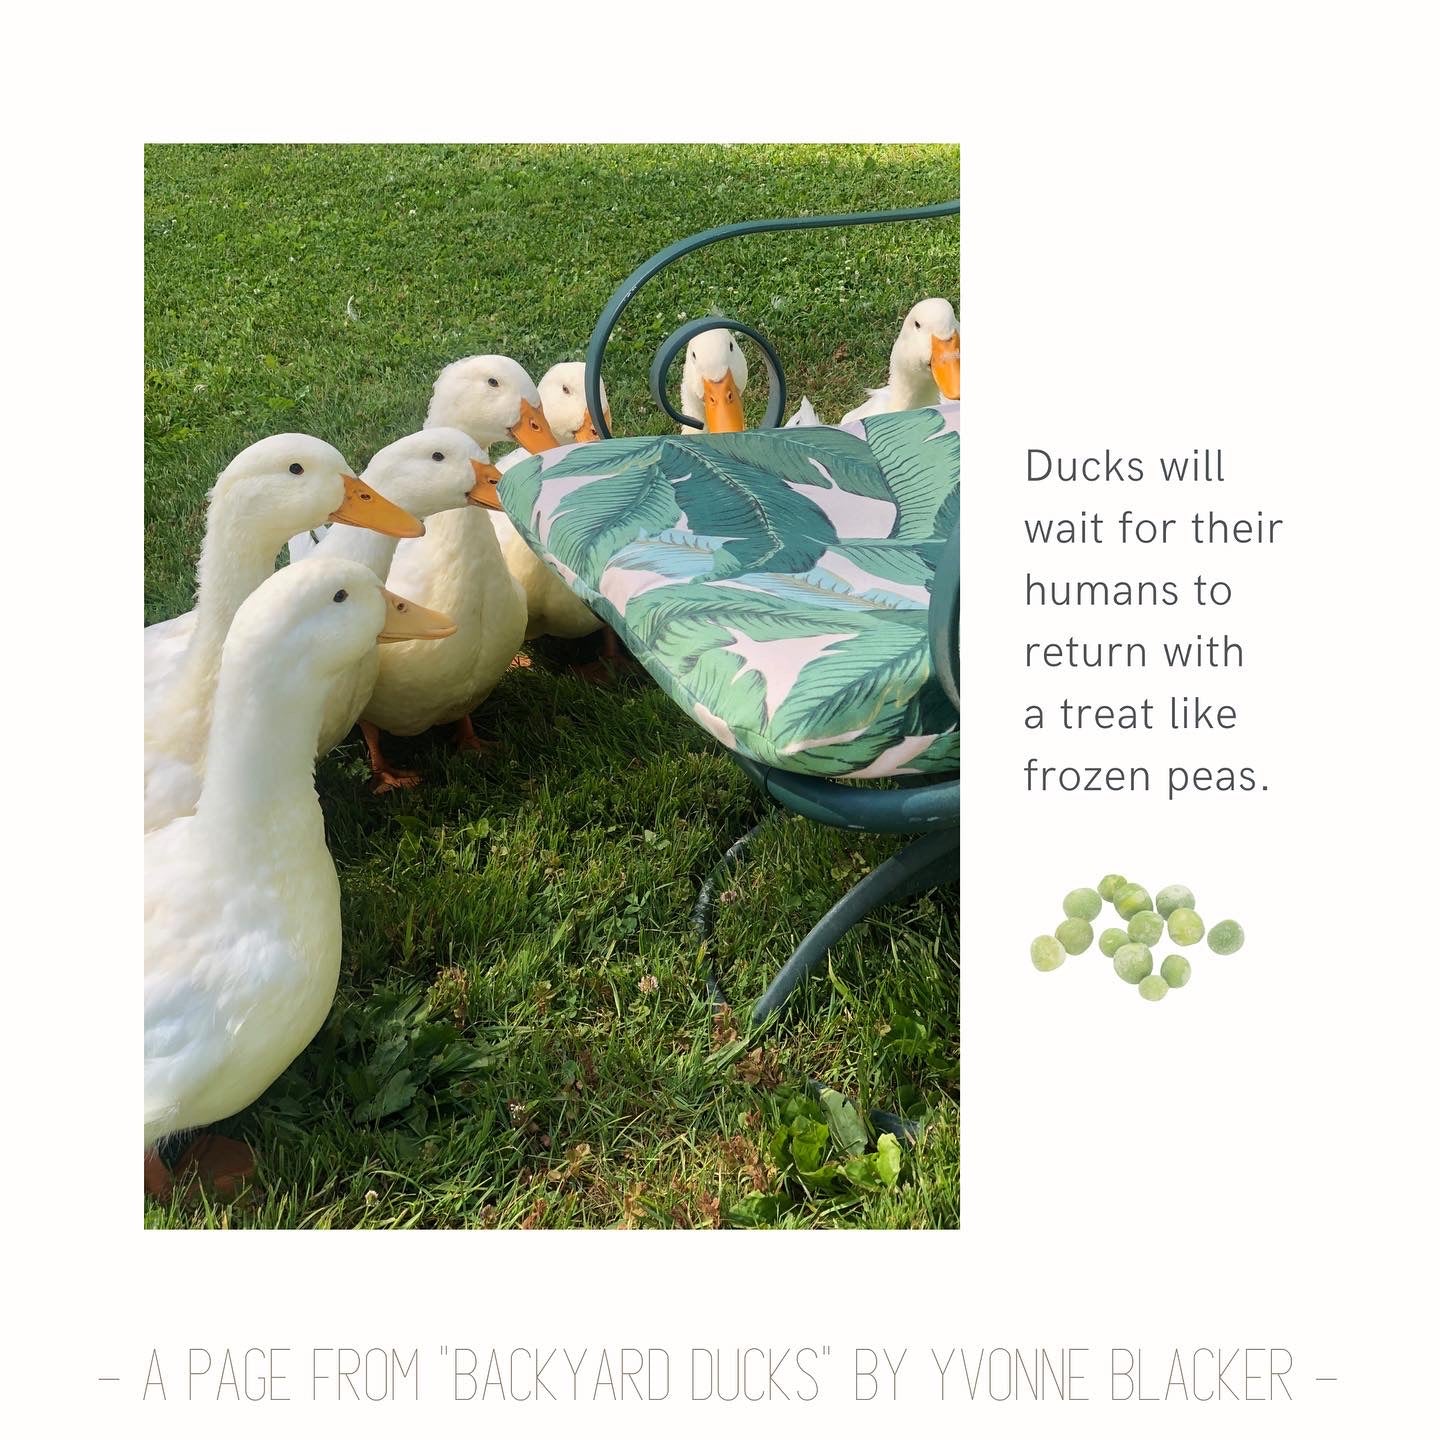 “Backyard Ducks” by Yvonne Blacker (hardcover edition)